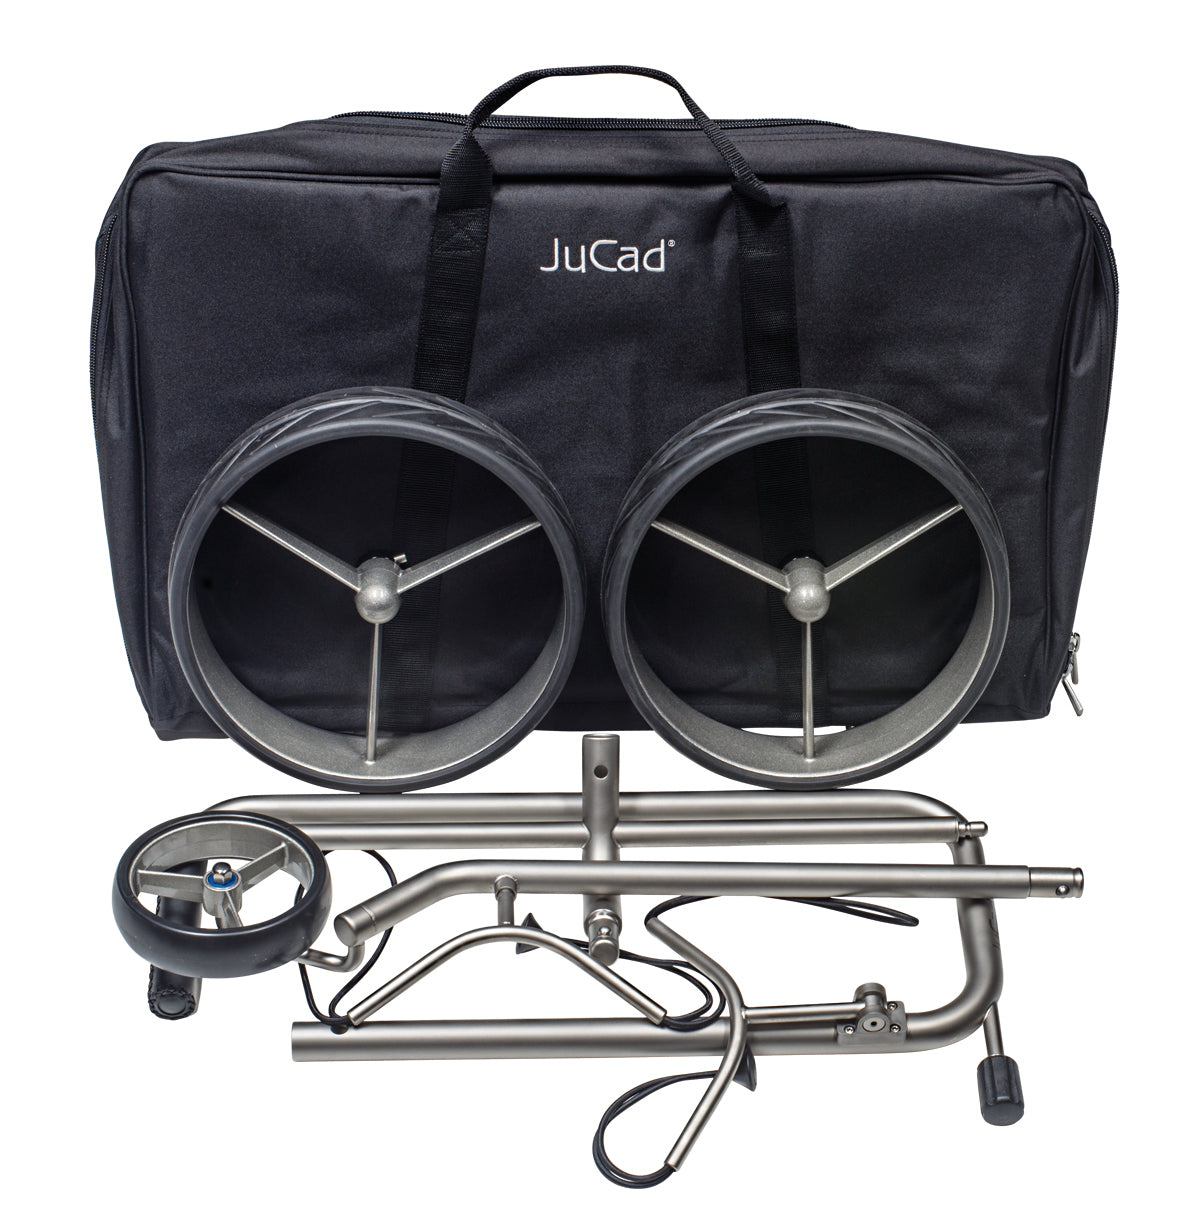 JuCad golf trolley Edition S 3 wheels - sporty bag carrier